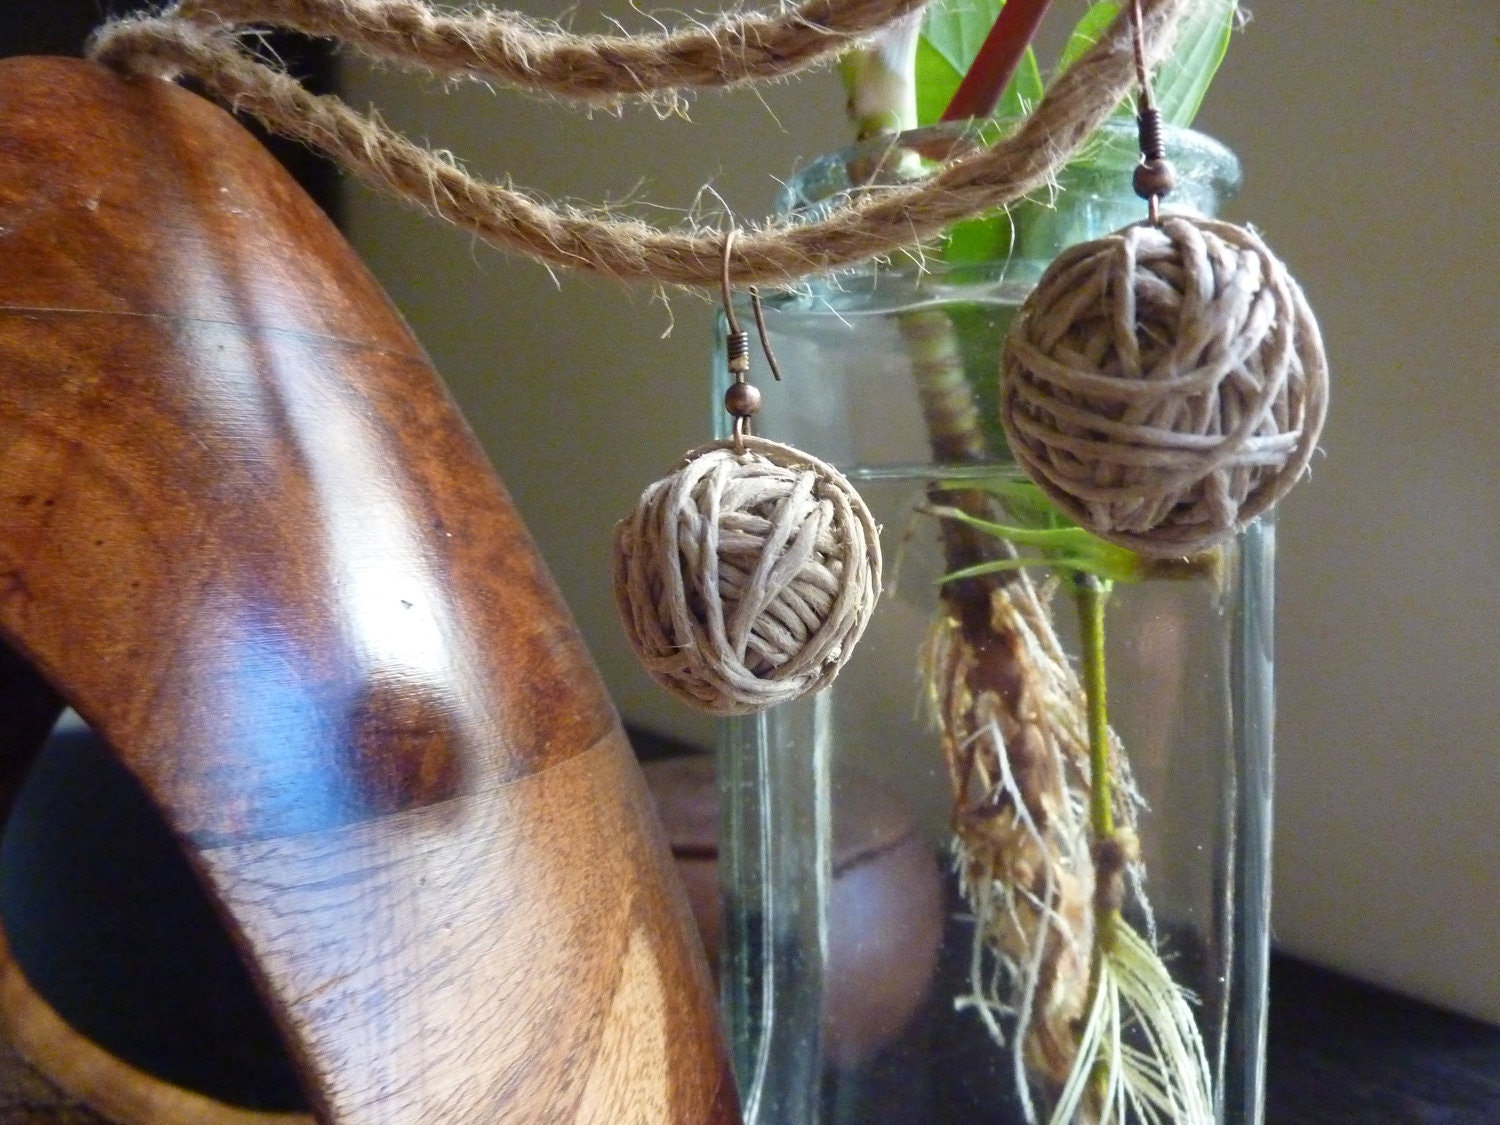 Handmade hemp cord balls earrings. Romantic and lightweight